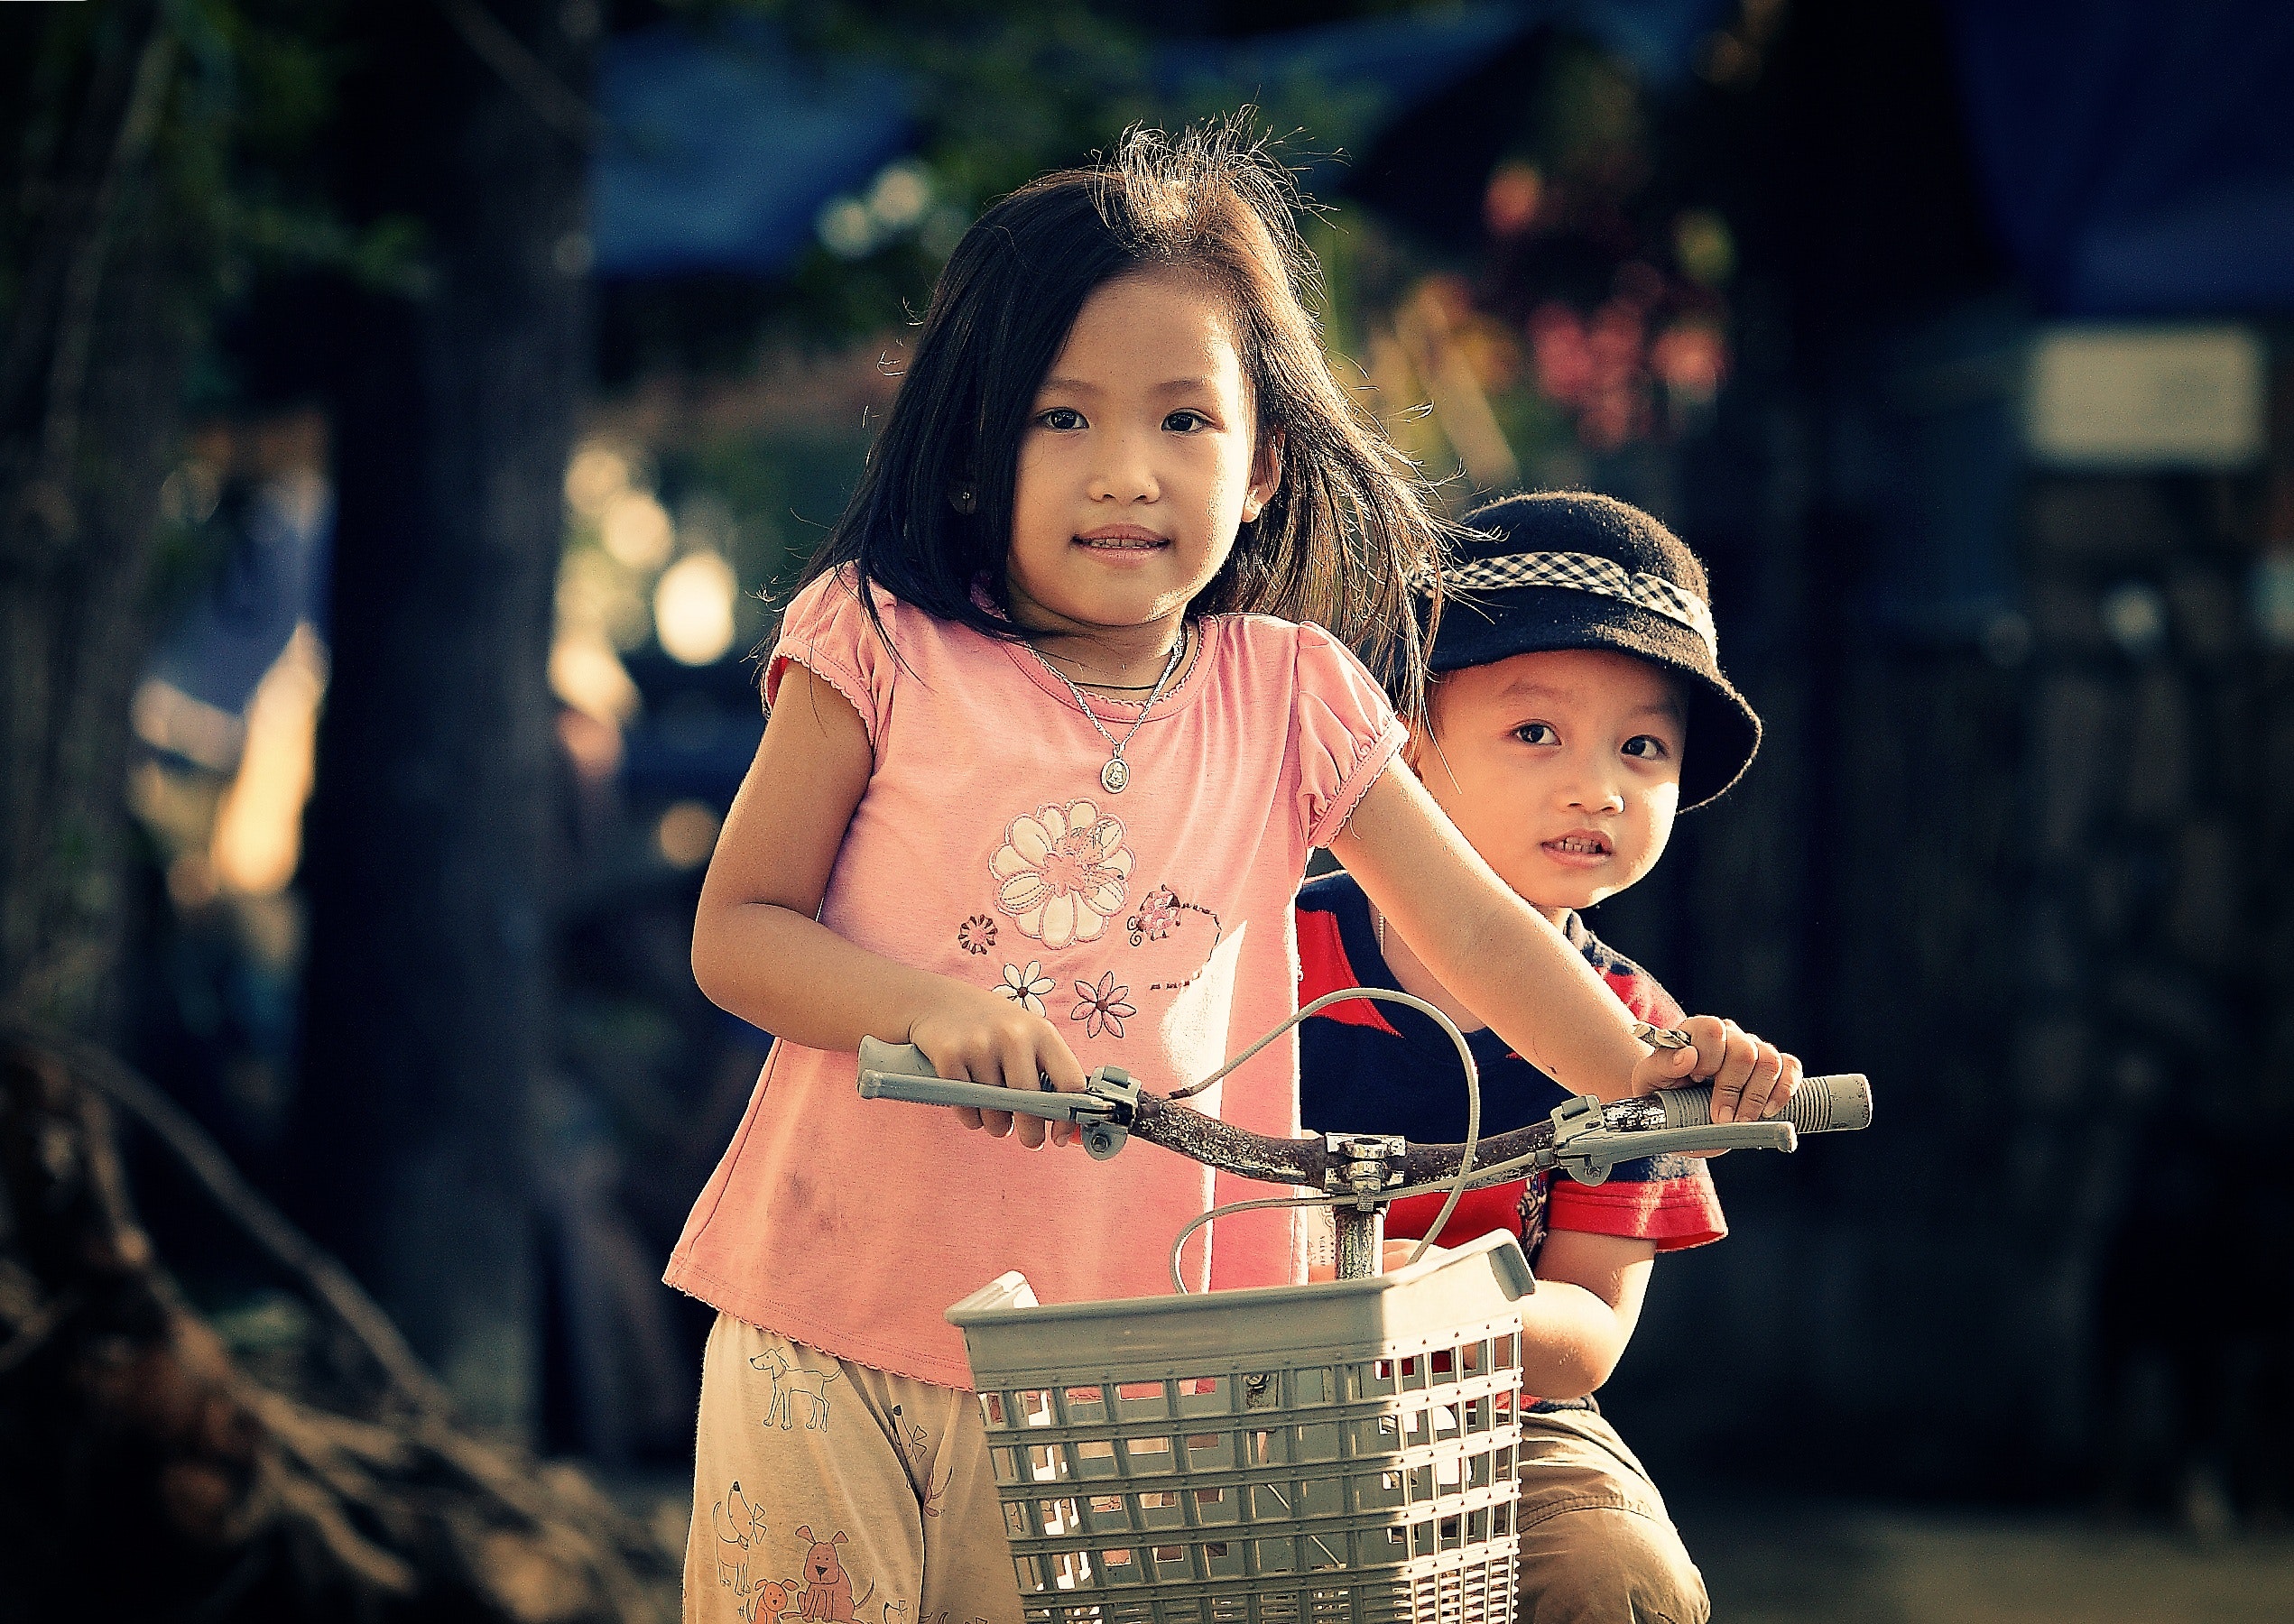 Children riding bicycle photo